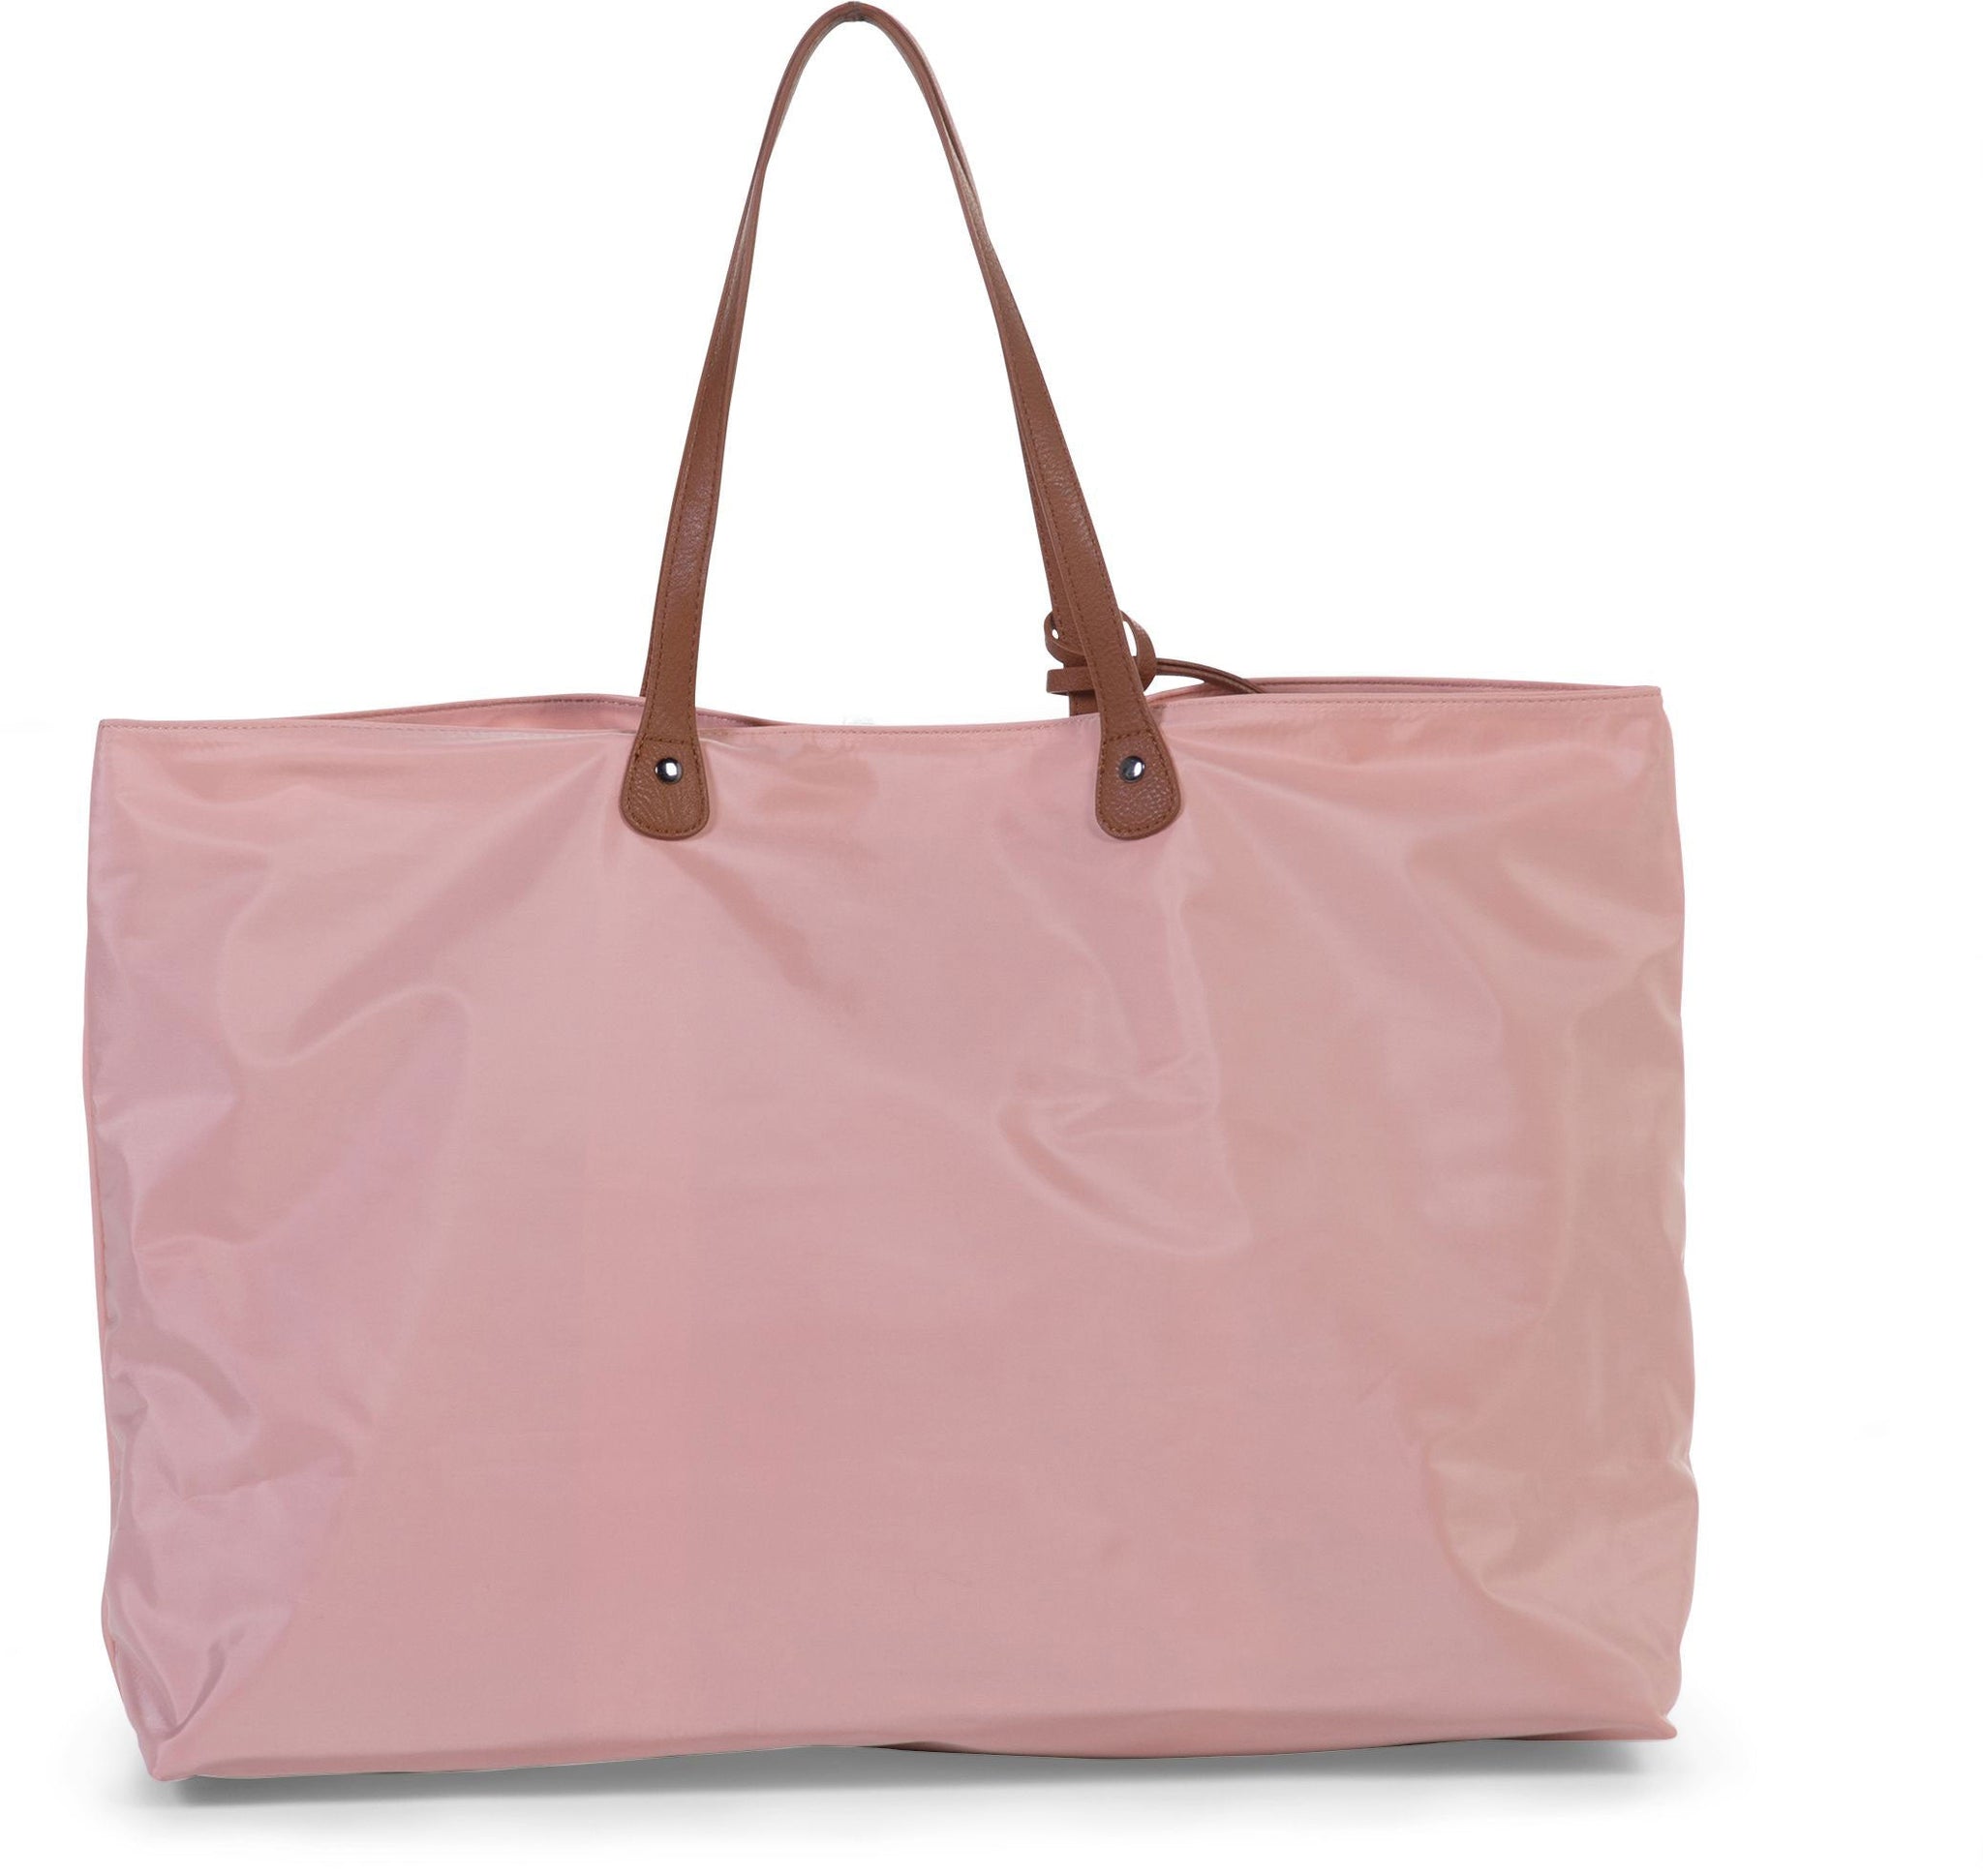 Family Bag Pink - ChildHome